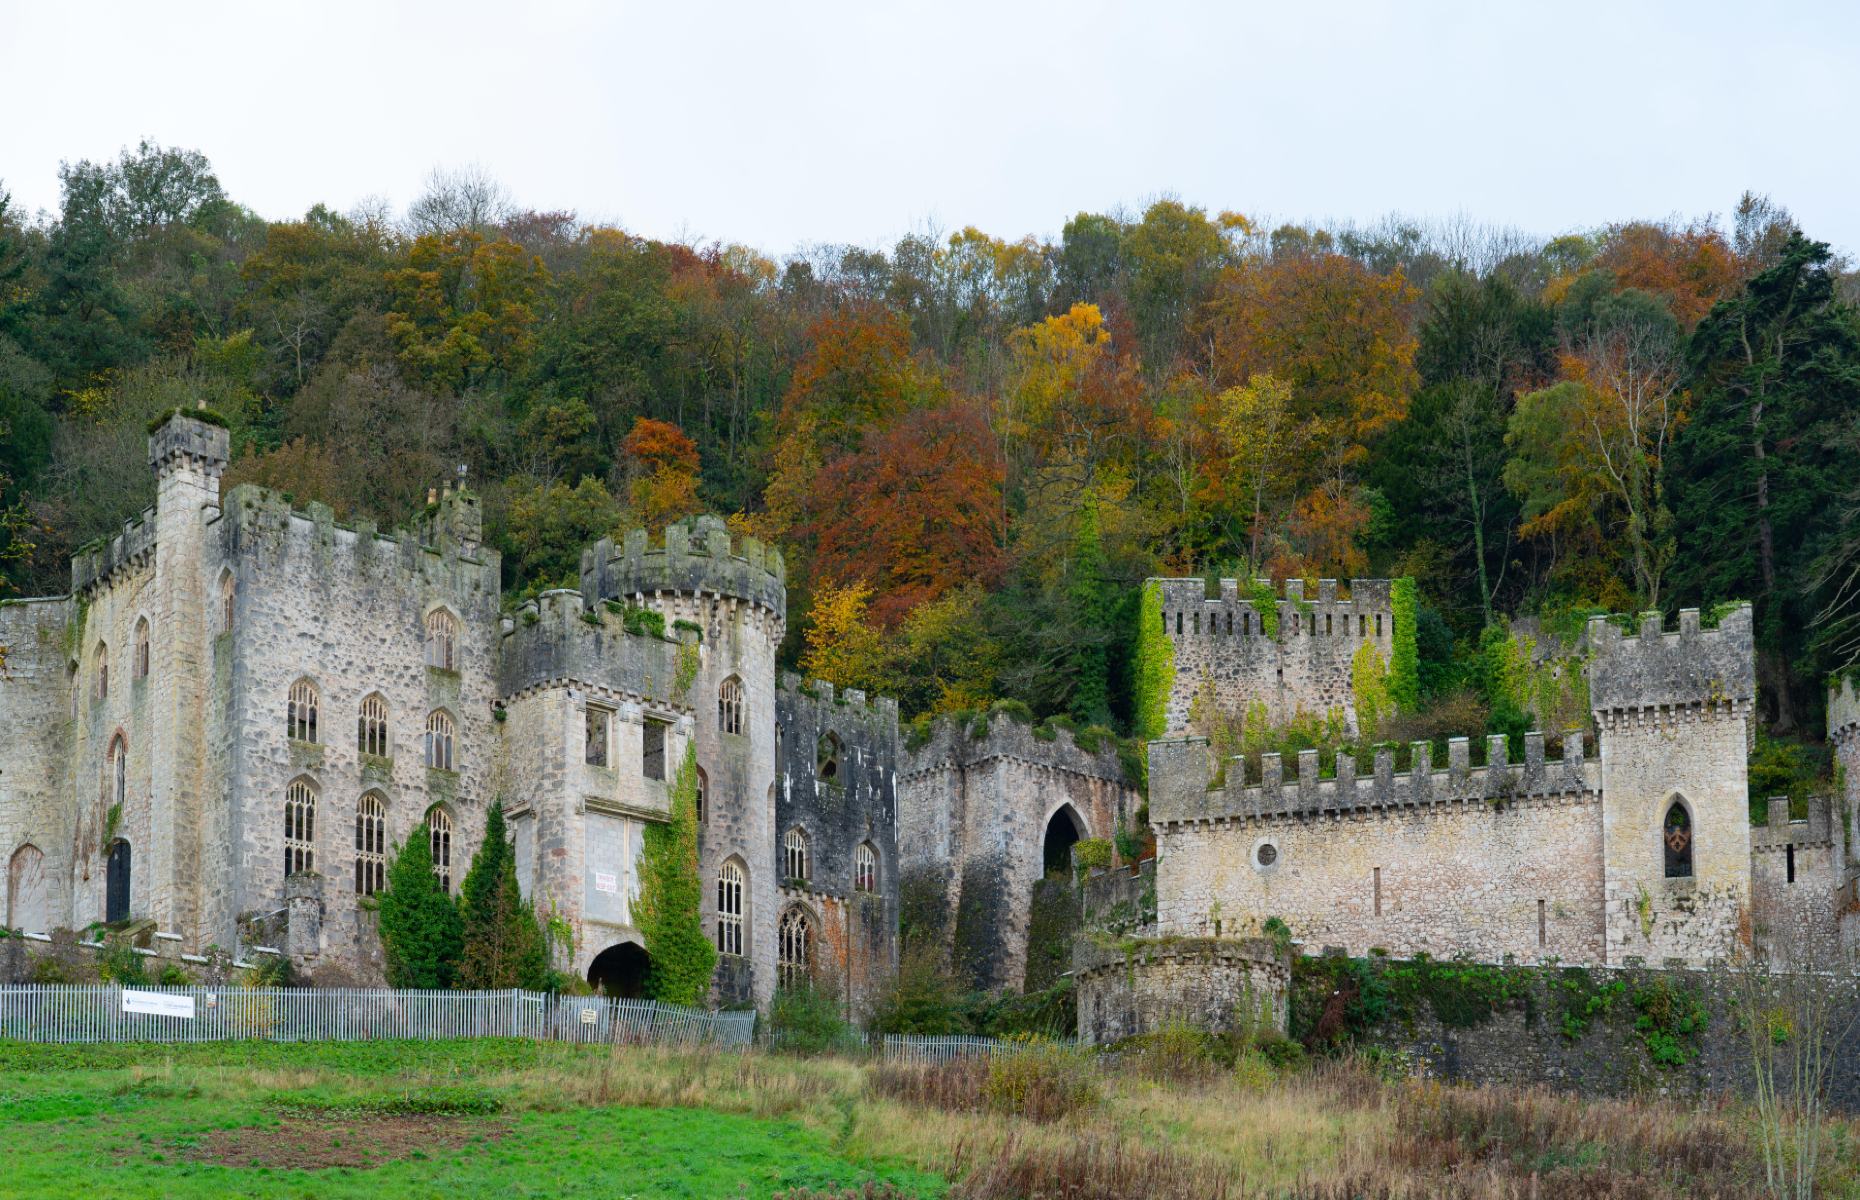 Gwrych Castle (Image: Paul Simpson / Alamy Stock Photo)